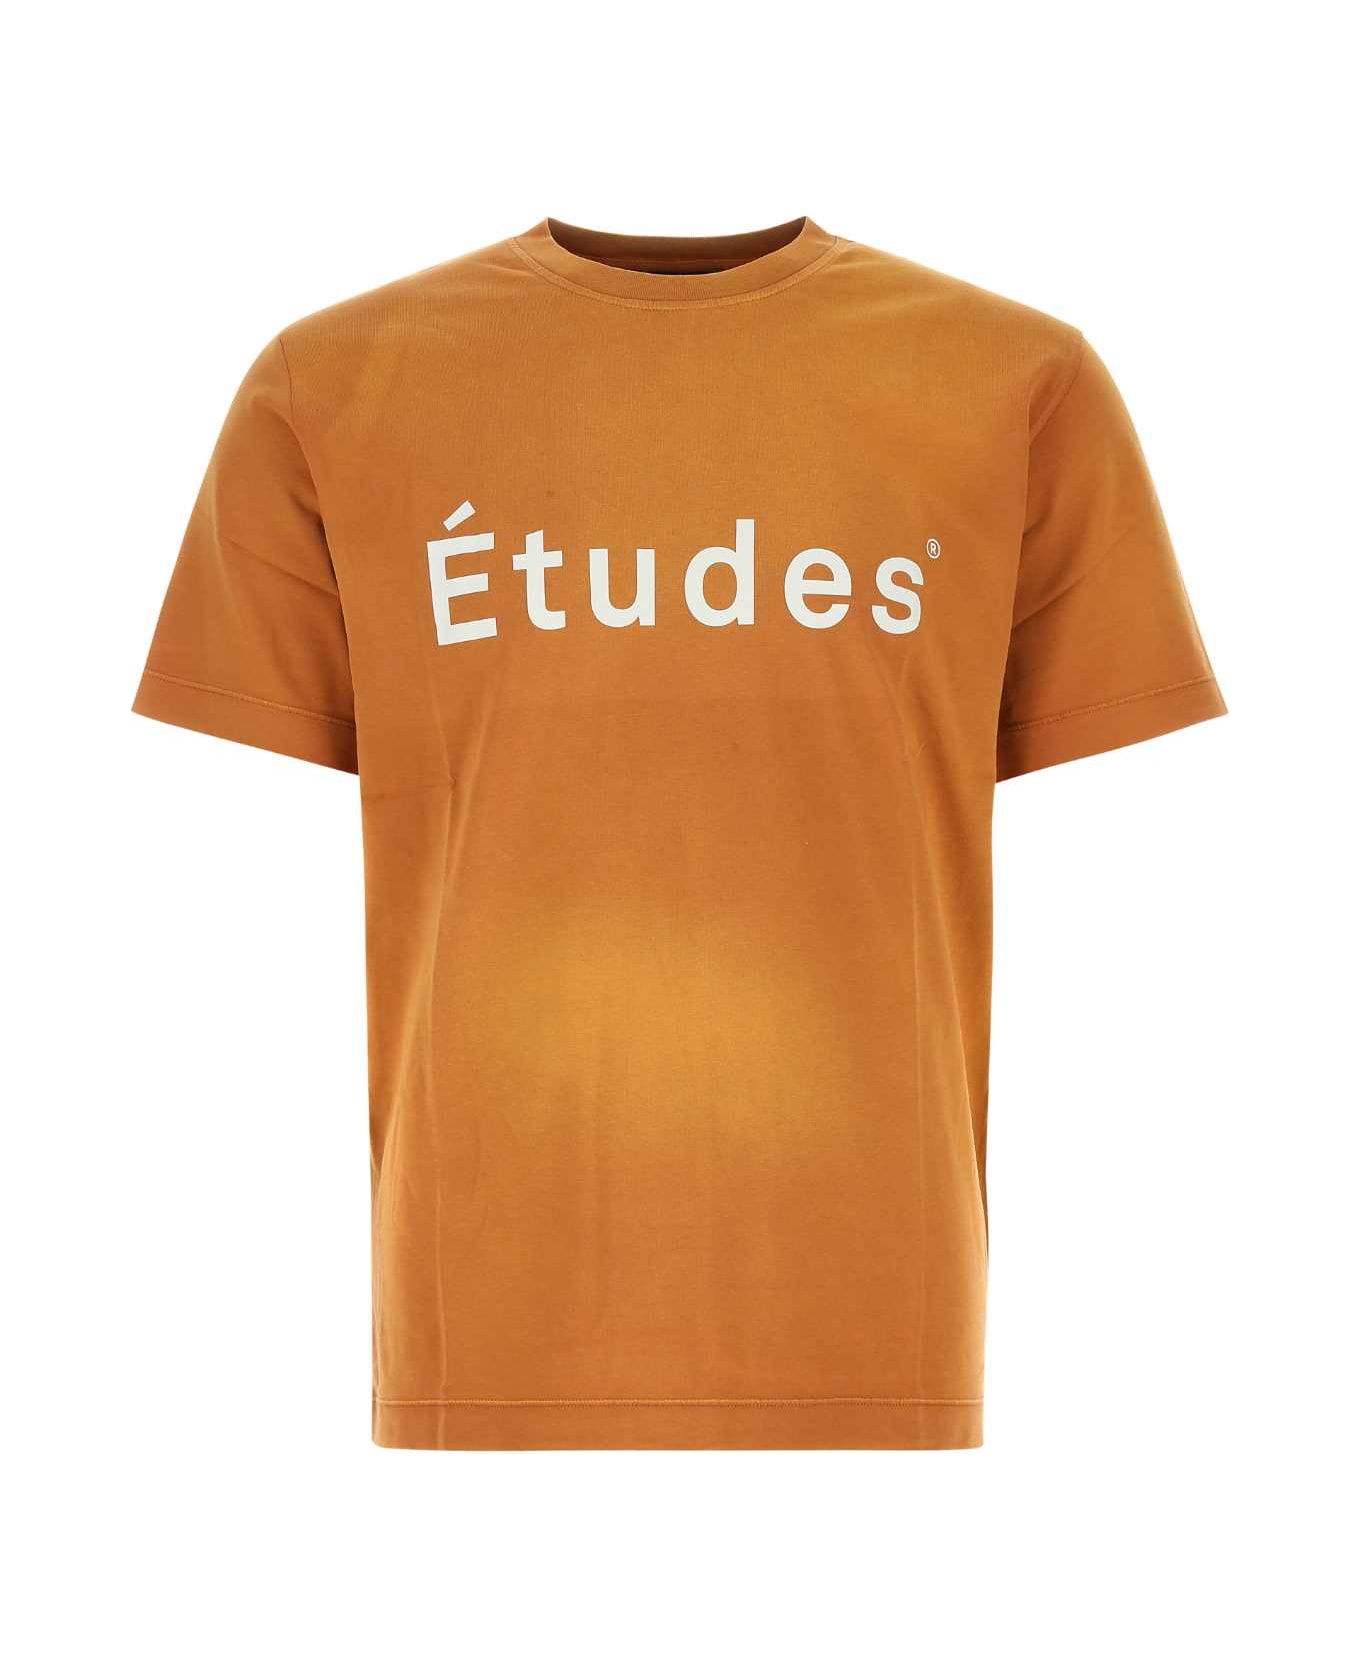 Études Caramel Cotton T-shirt - SPRAYBROWN